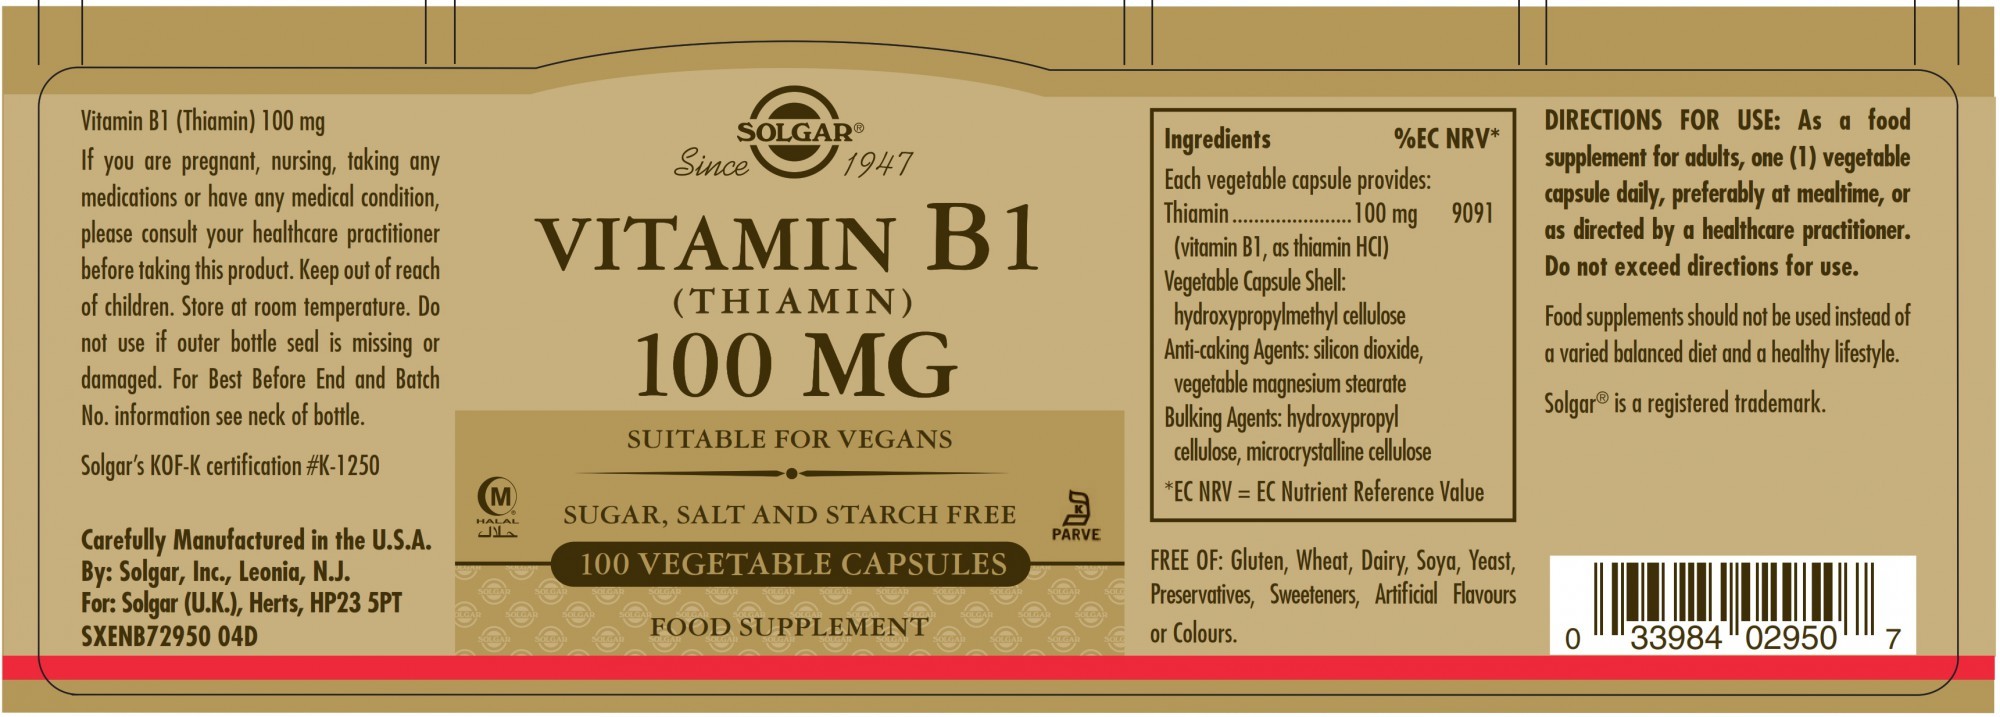 Solgar Vitamin B1 (Thiamin) 100 MG